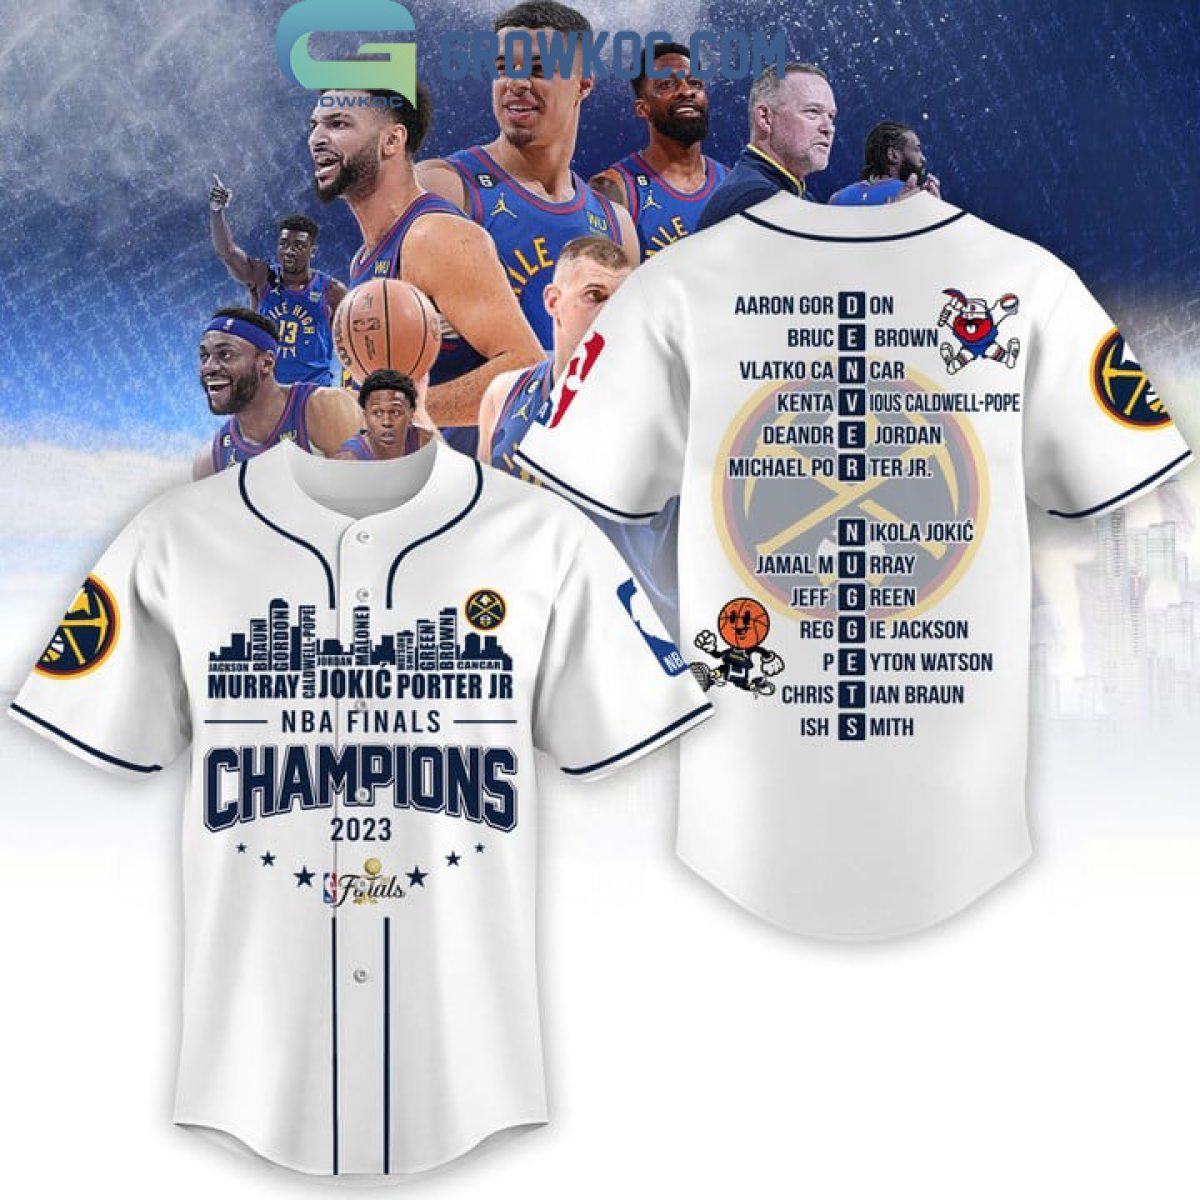 Denver Nuggets 2023 NBA Finals Champions Midnight Blue Design Baseball  Jersey - Growkoc